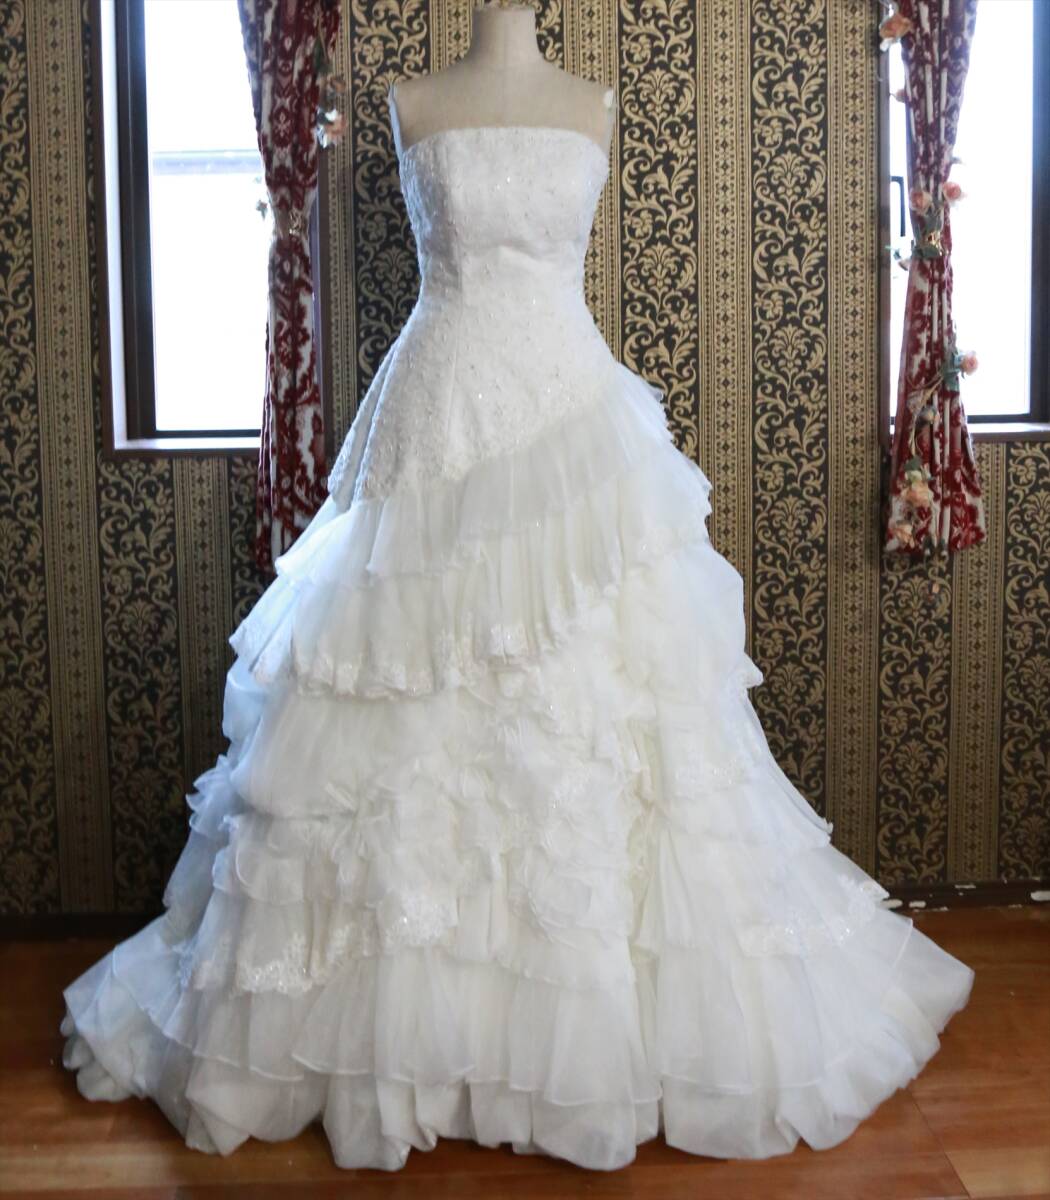  large size high class wedding dress 11 number 13 number 15 number L~3L size soft mermaid line compilation up adjustment possibility 